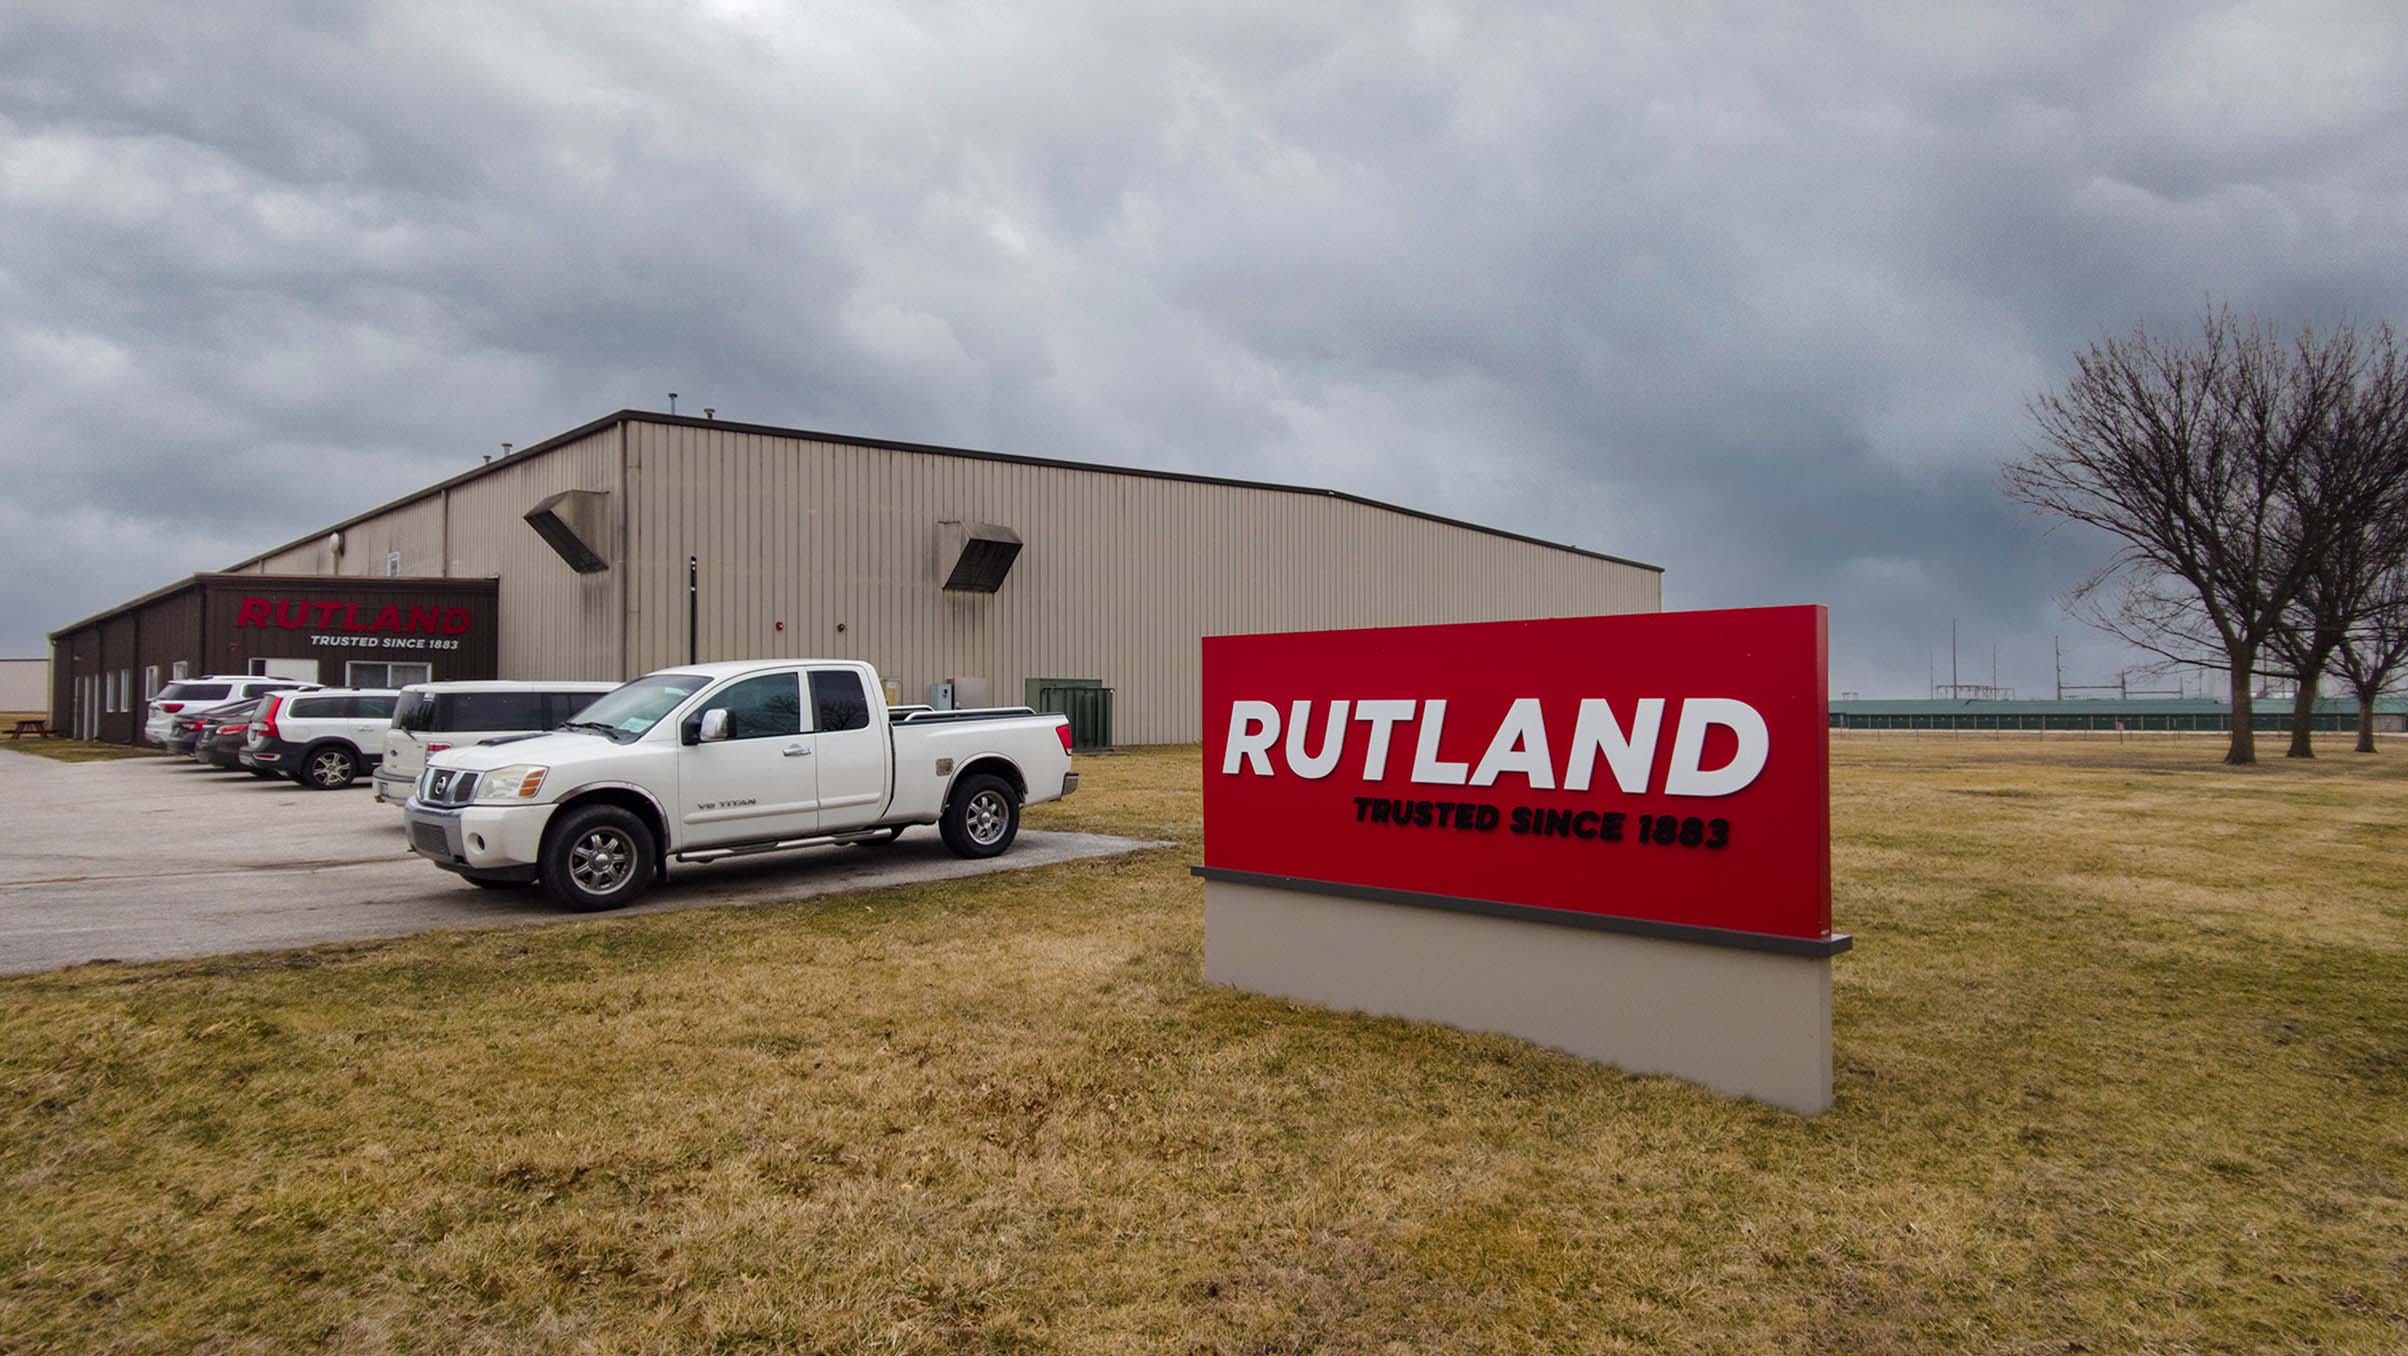 Rutland Products